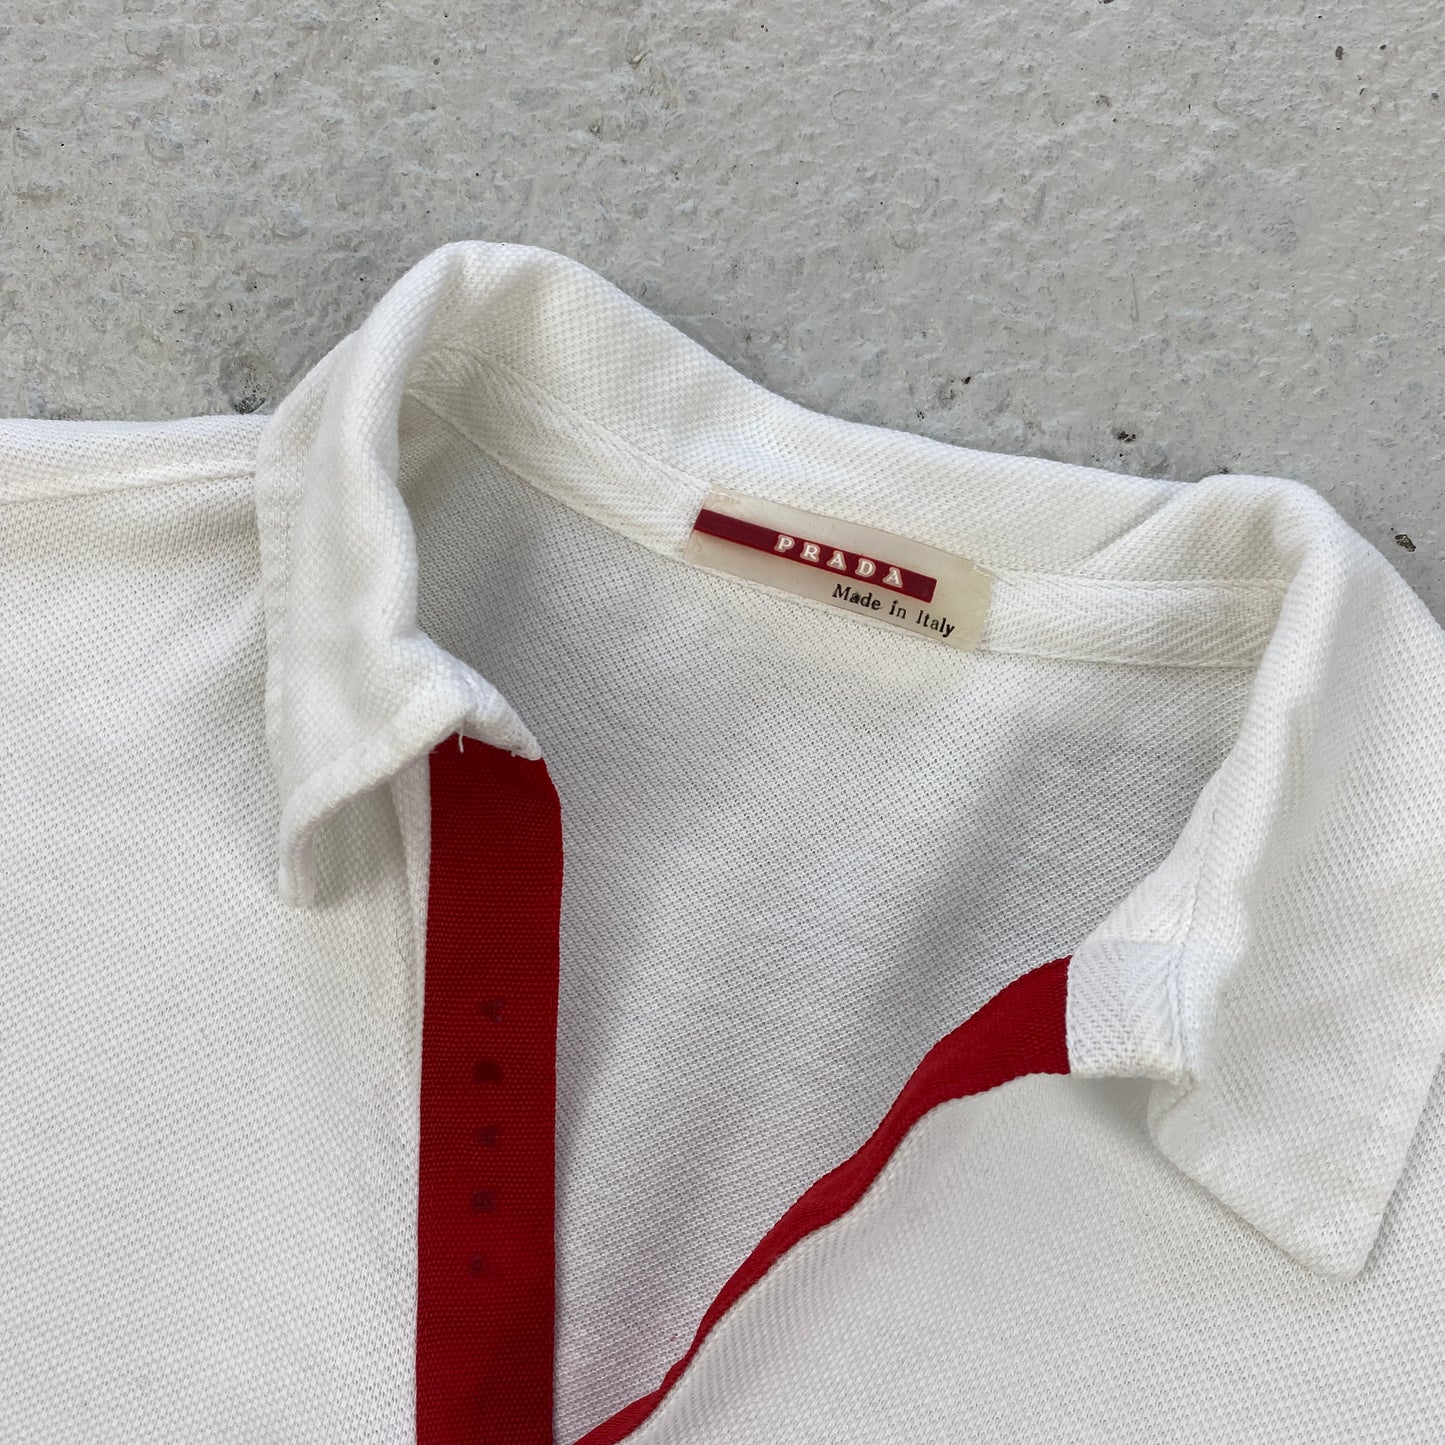 Prada polo shirt (XS)